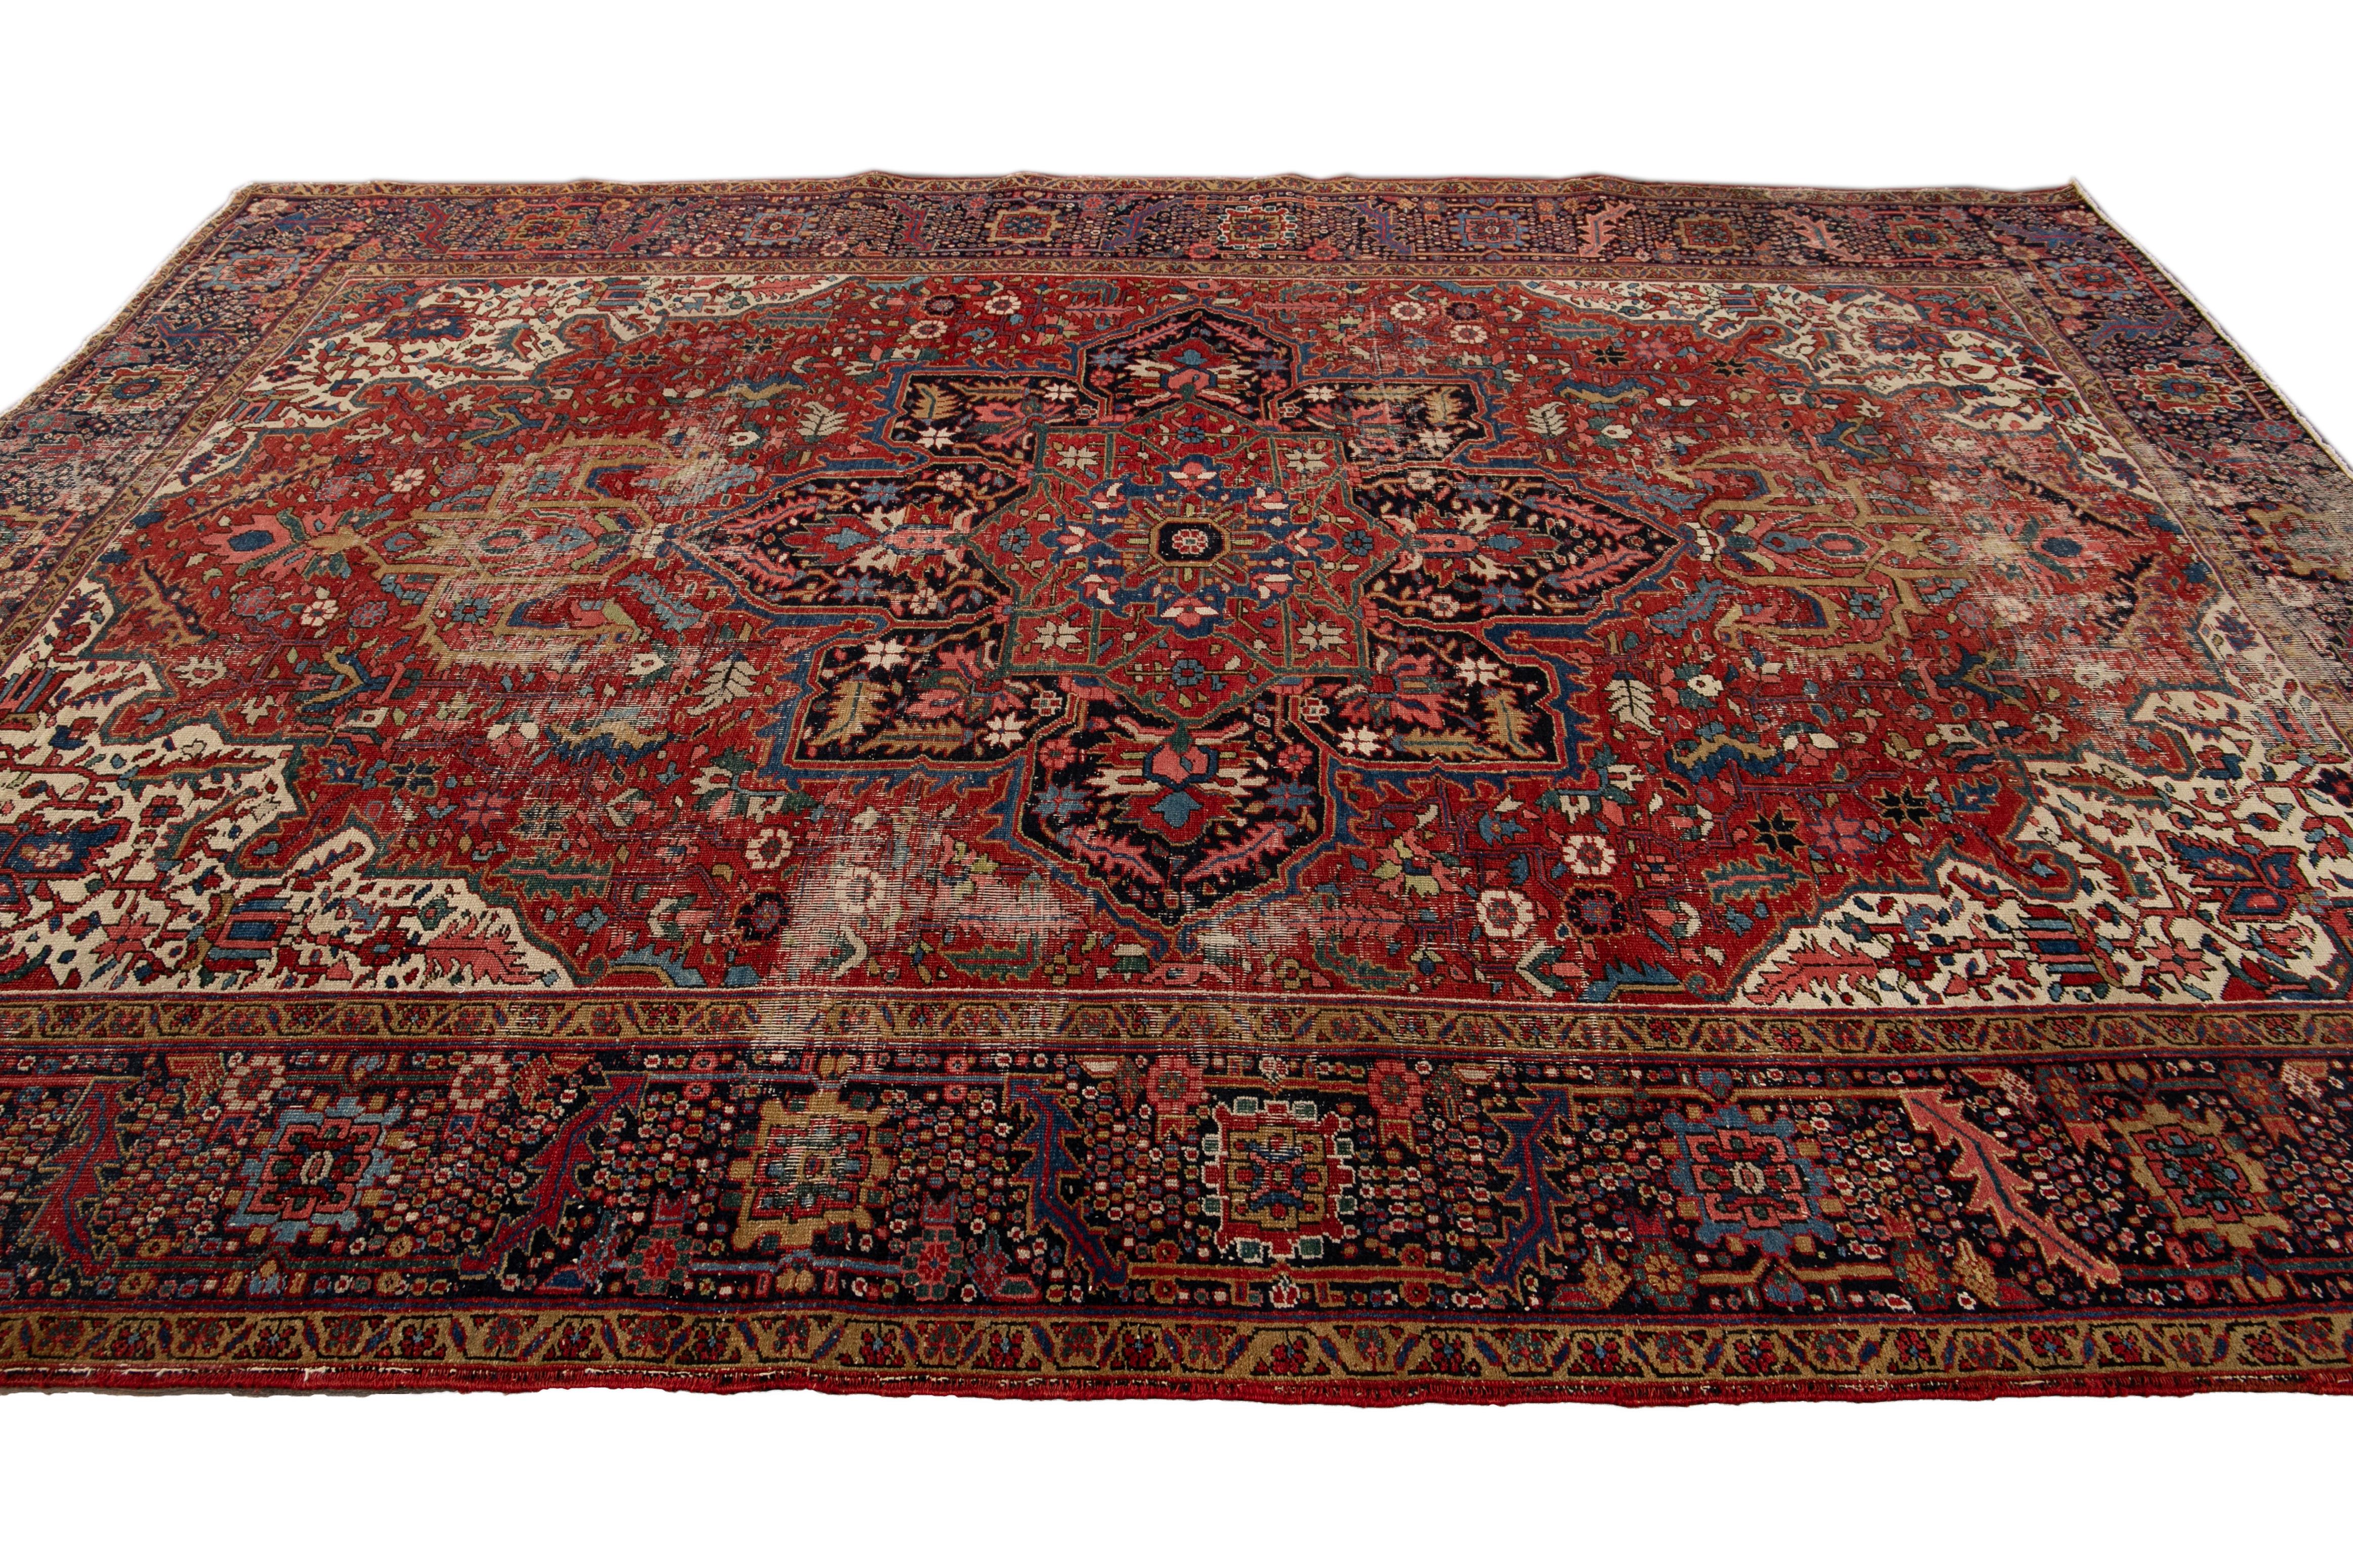 Early 20th Century Antique Persian Heriz Wool Rug 12